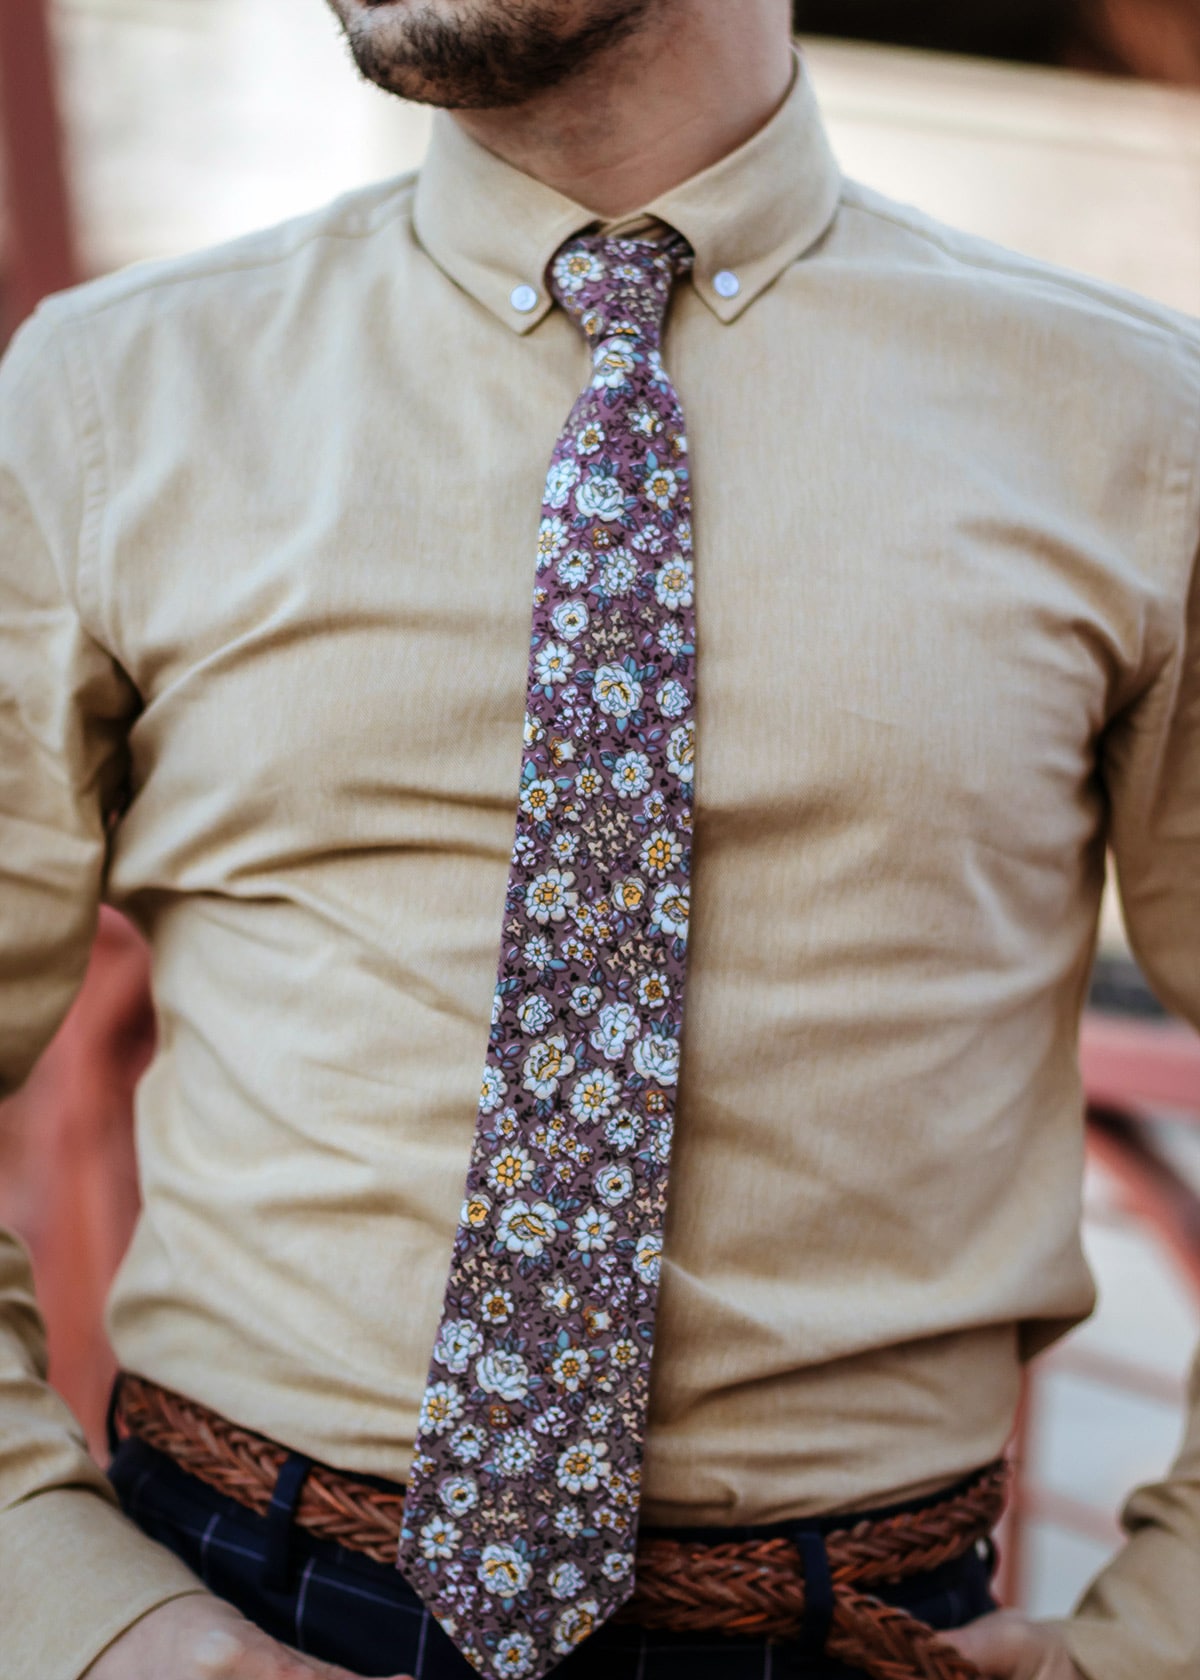 David wearing a floral tie